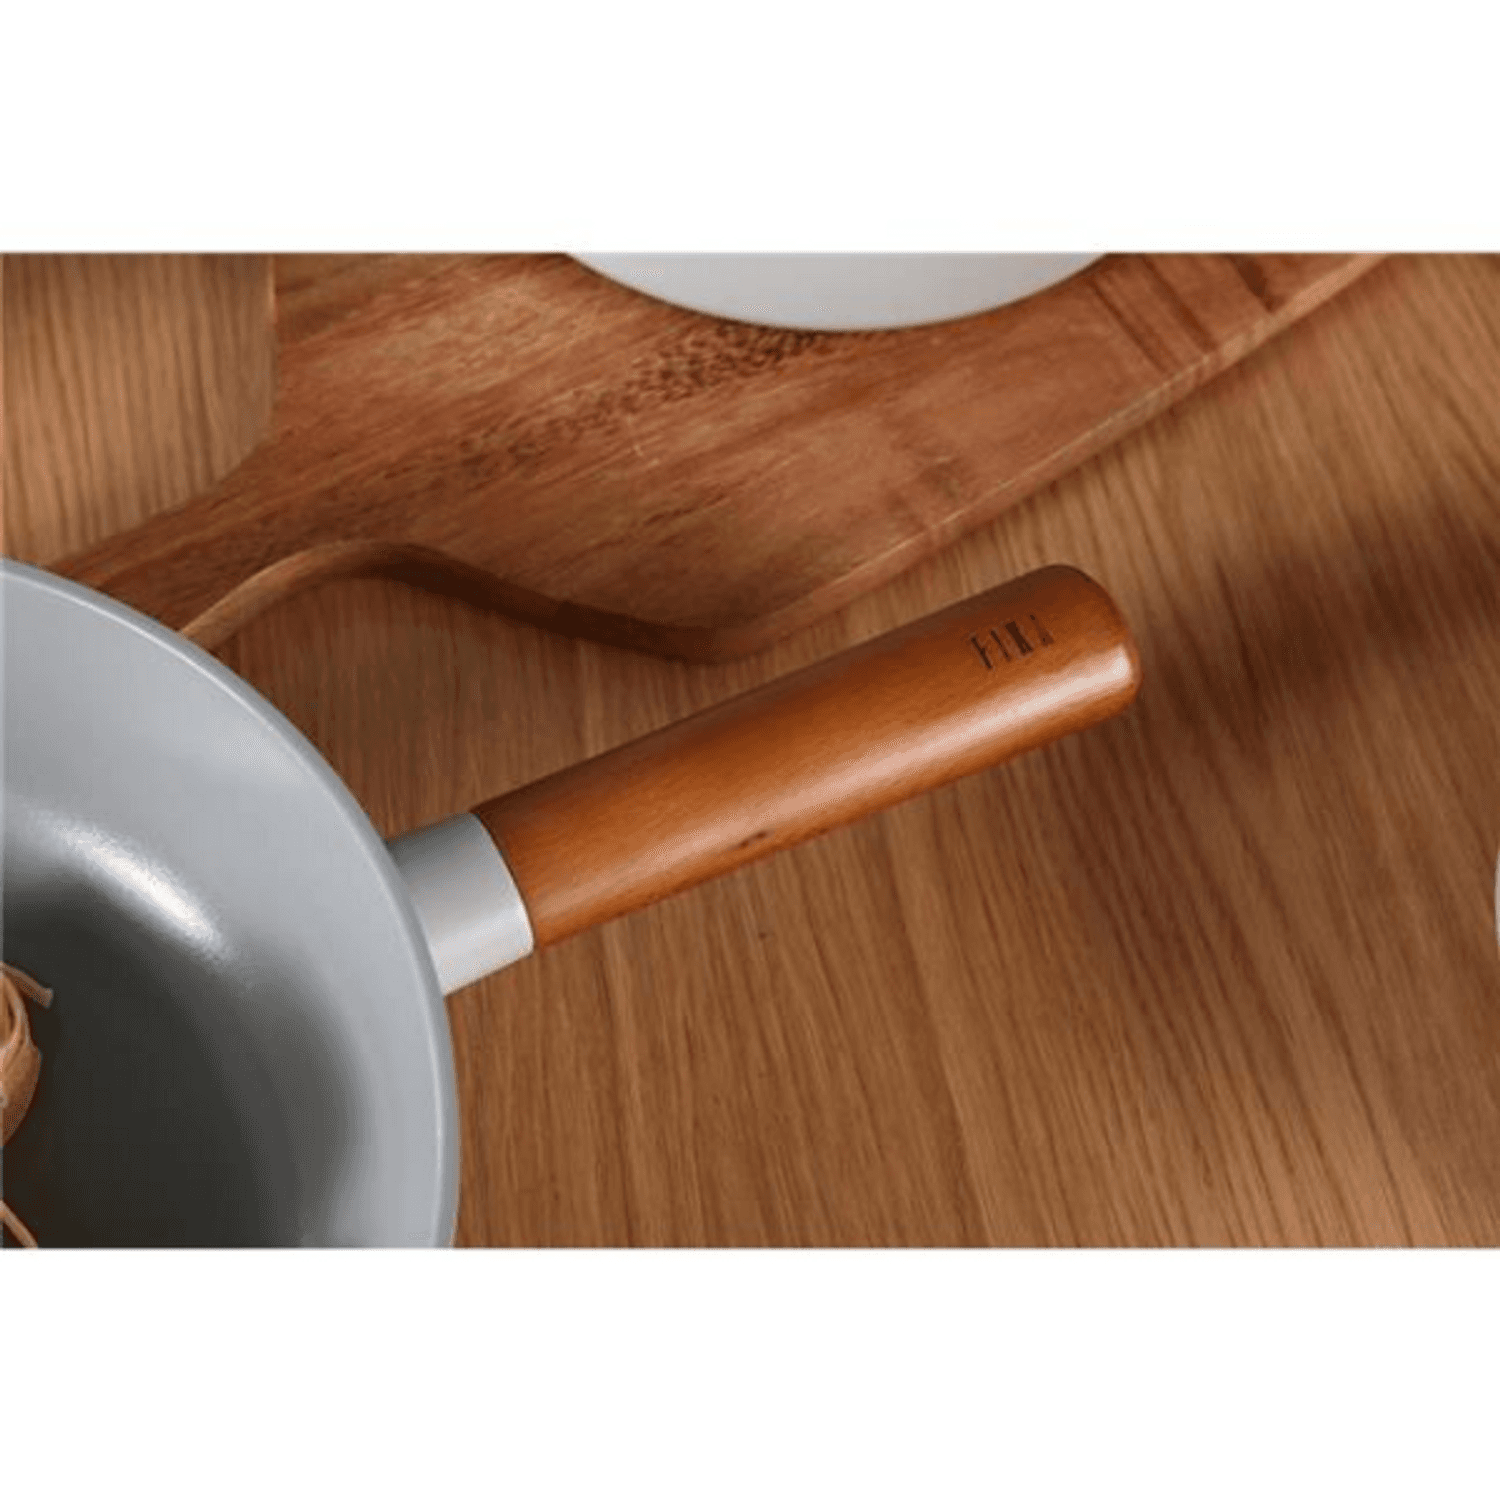 Fika 10 Wok Pan with Wooden Handle 26cm